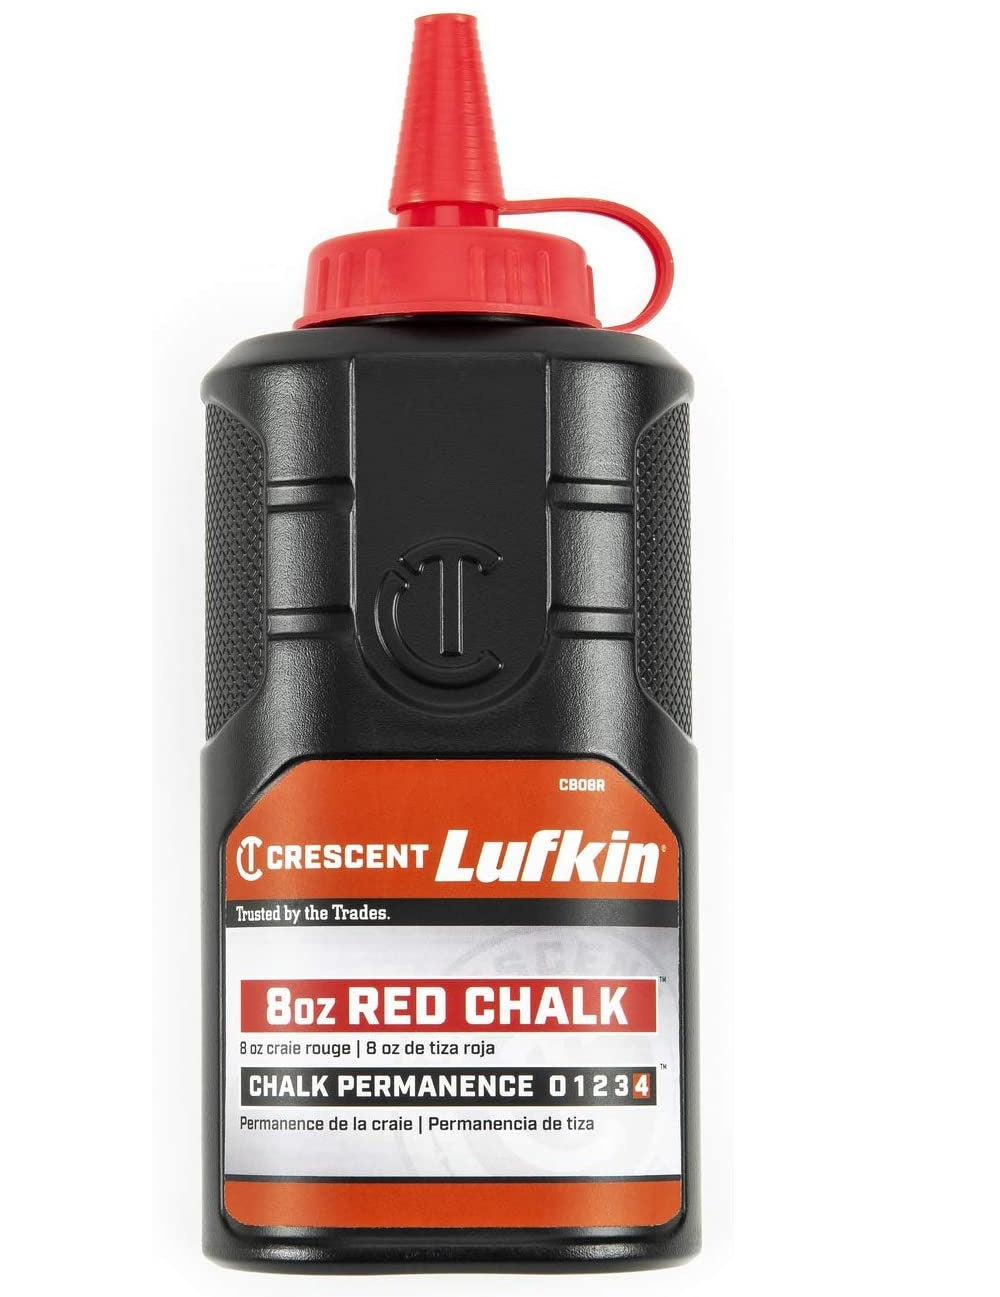 Crescent CB08R Lufkin Red Chalk Refill, 8 Oz